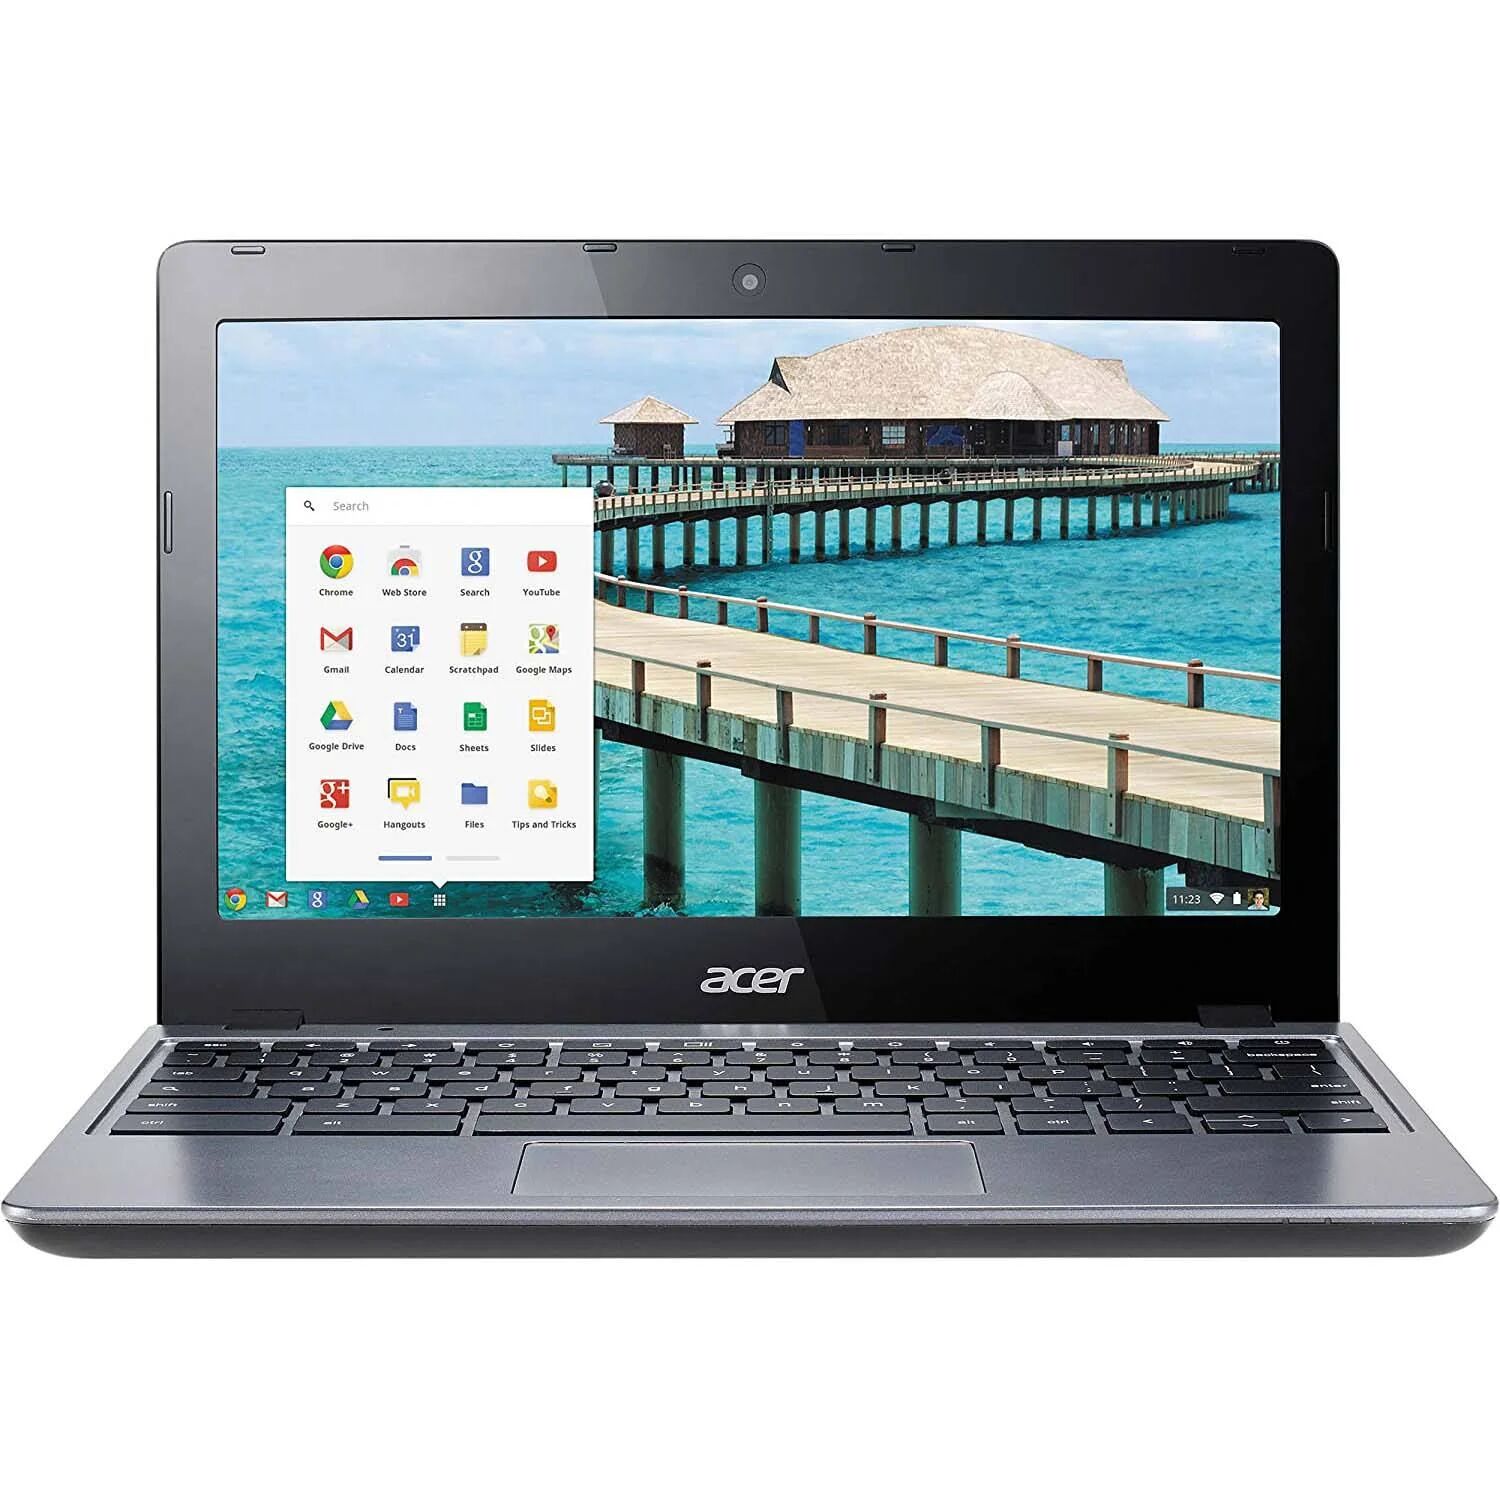 DailySale ACER Chromebook 11.6" LED Celeron 2955U (1.4 GHz), 4GB16GB (Refurbished)